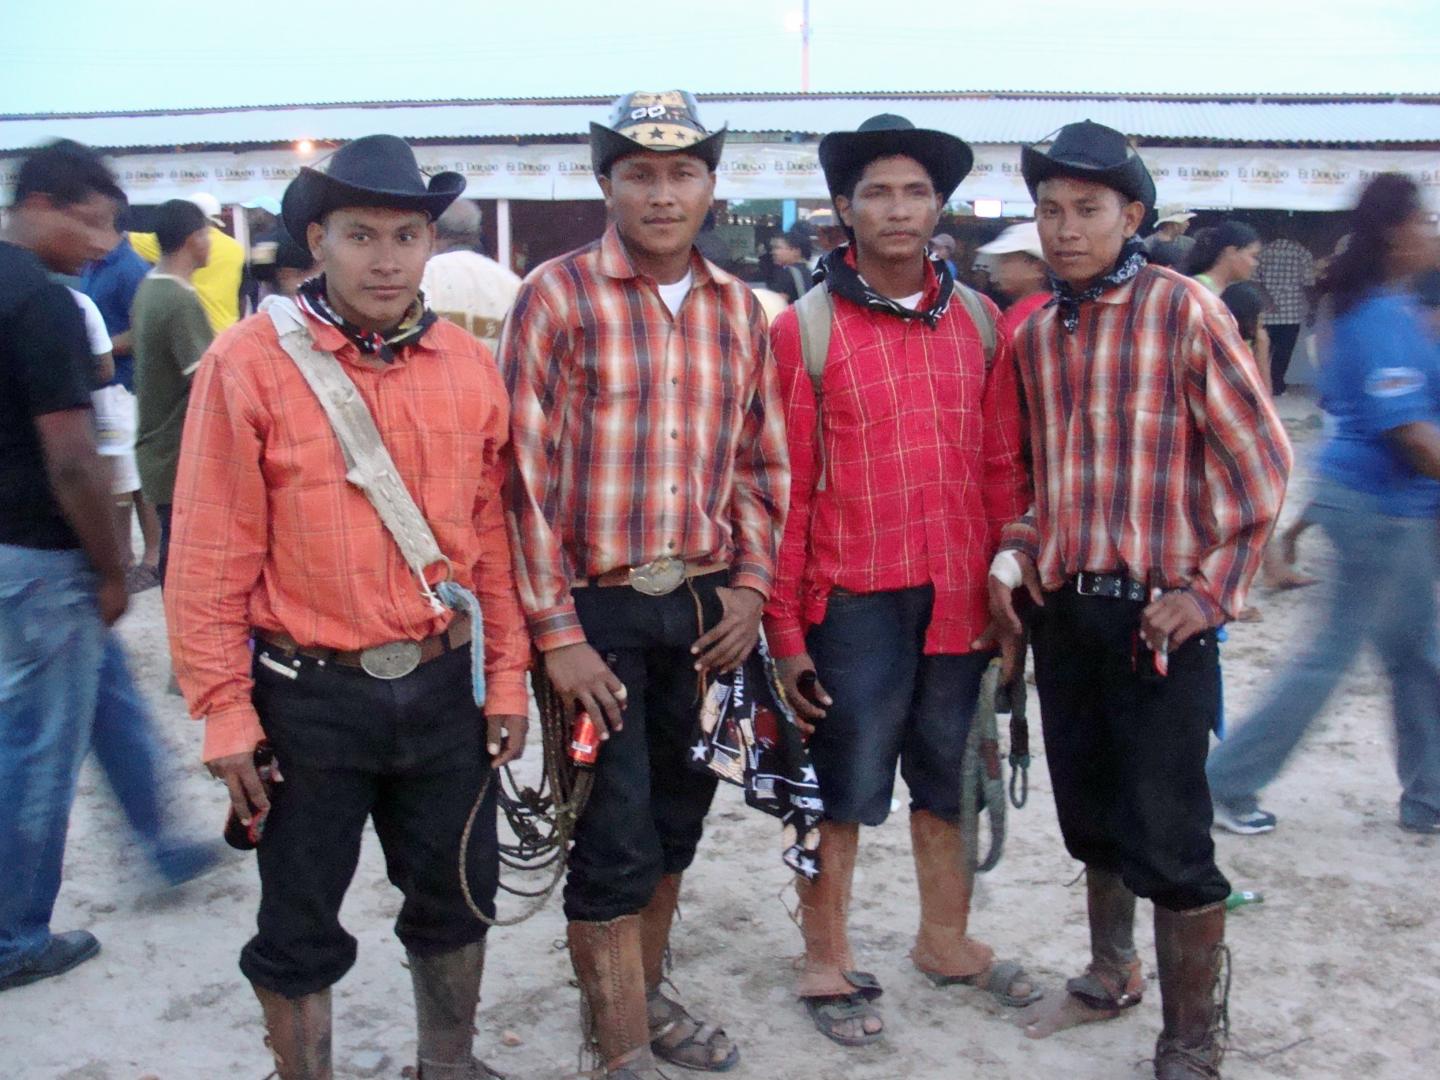 Makushi Cowboys in Guyana